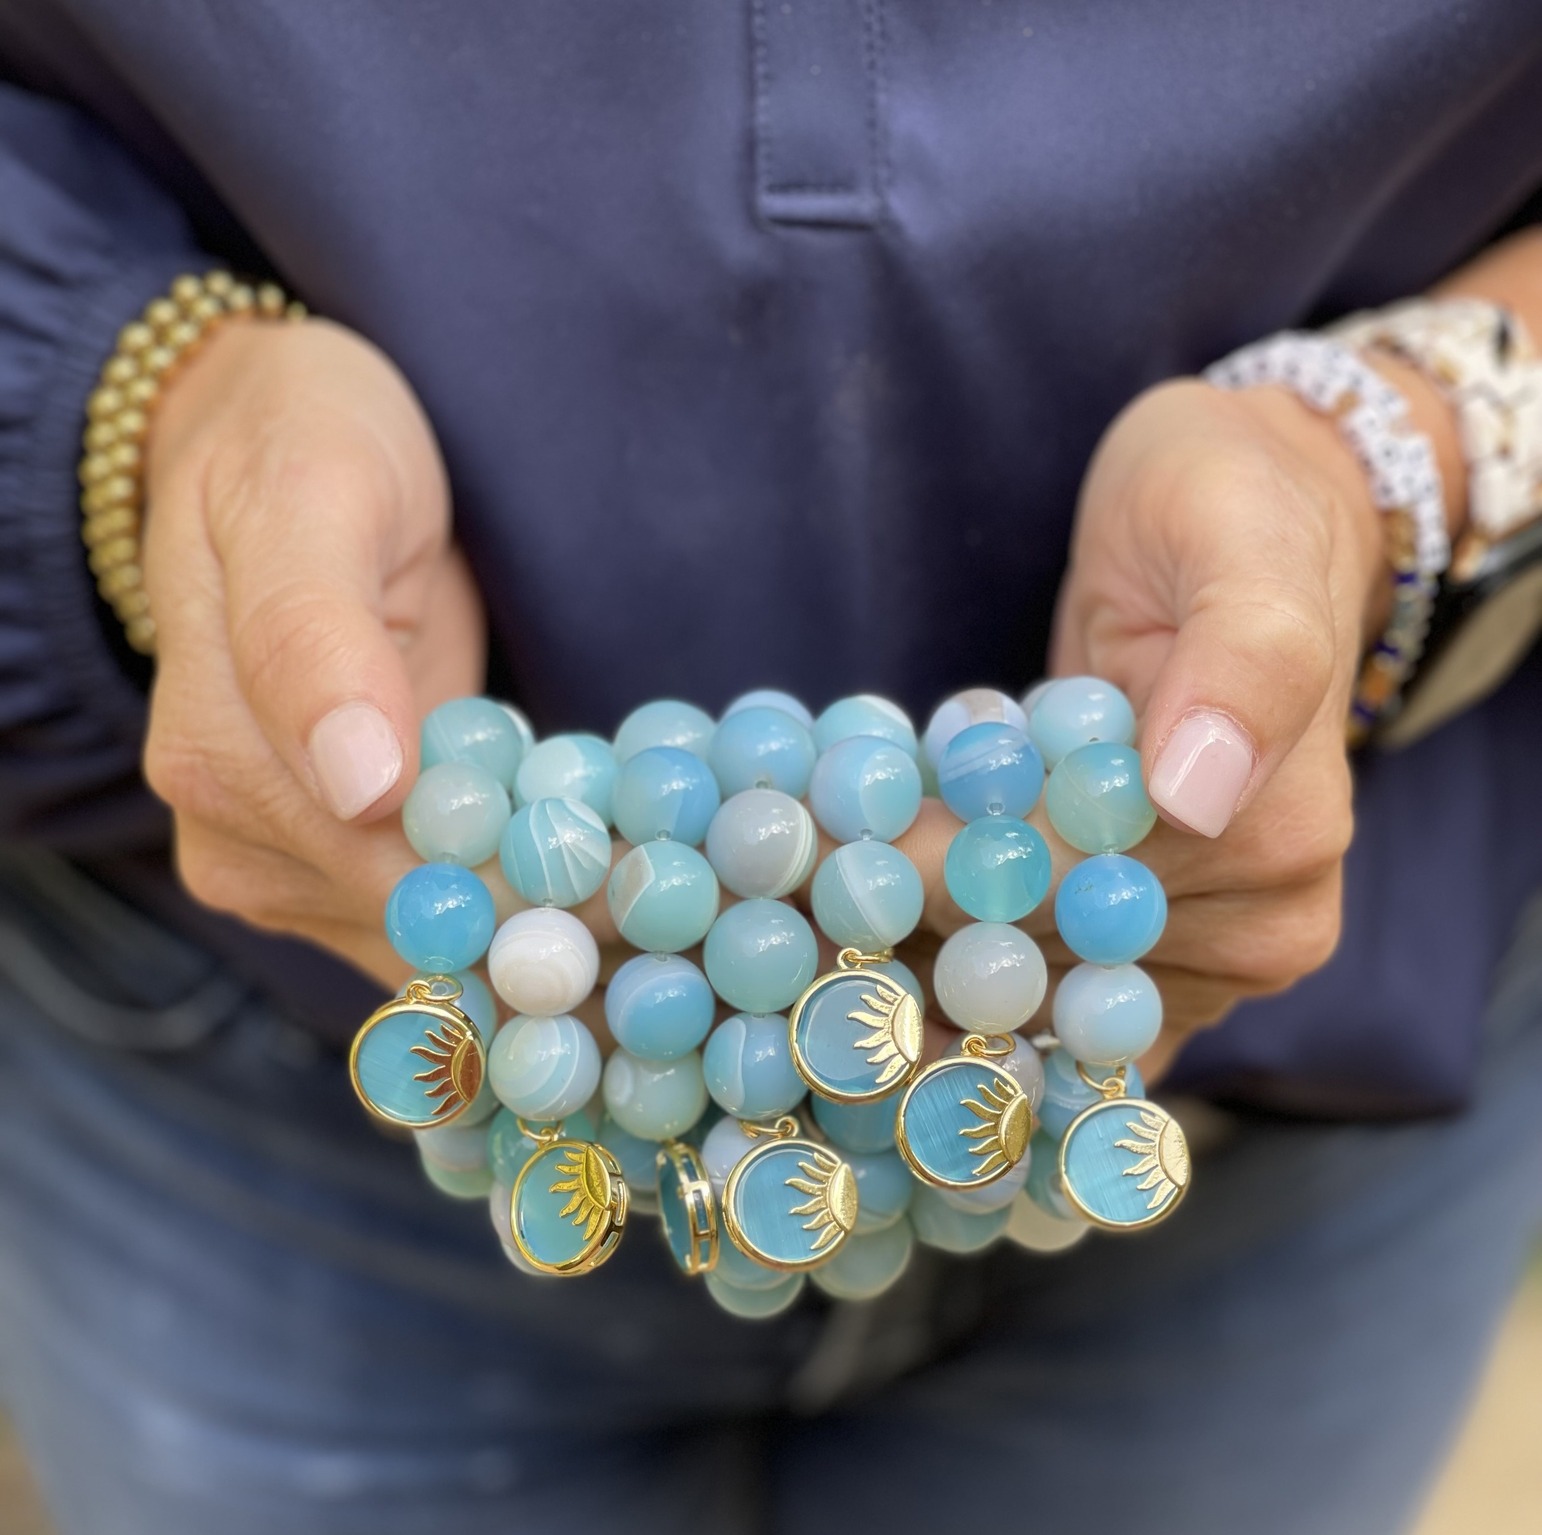 hands holding a stack of blue beads/bracelets